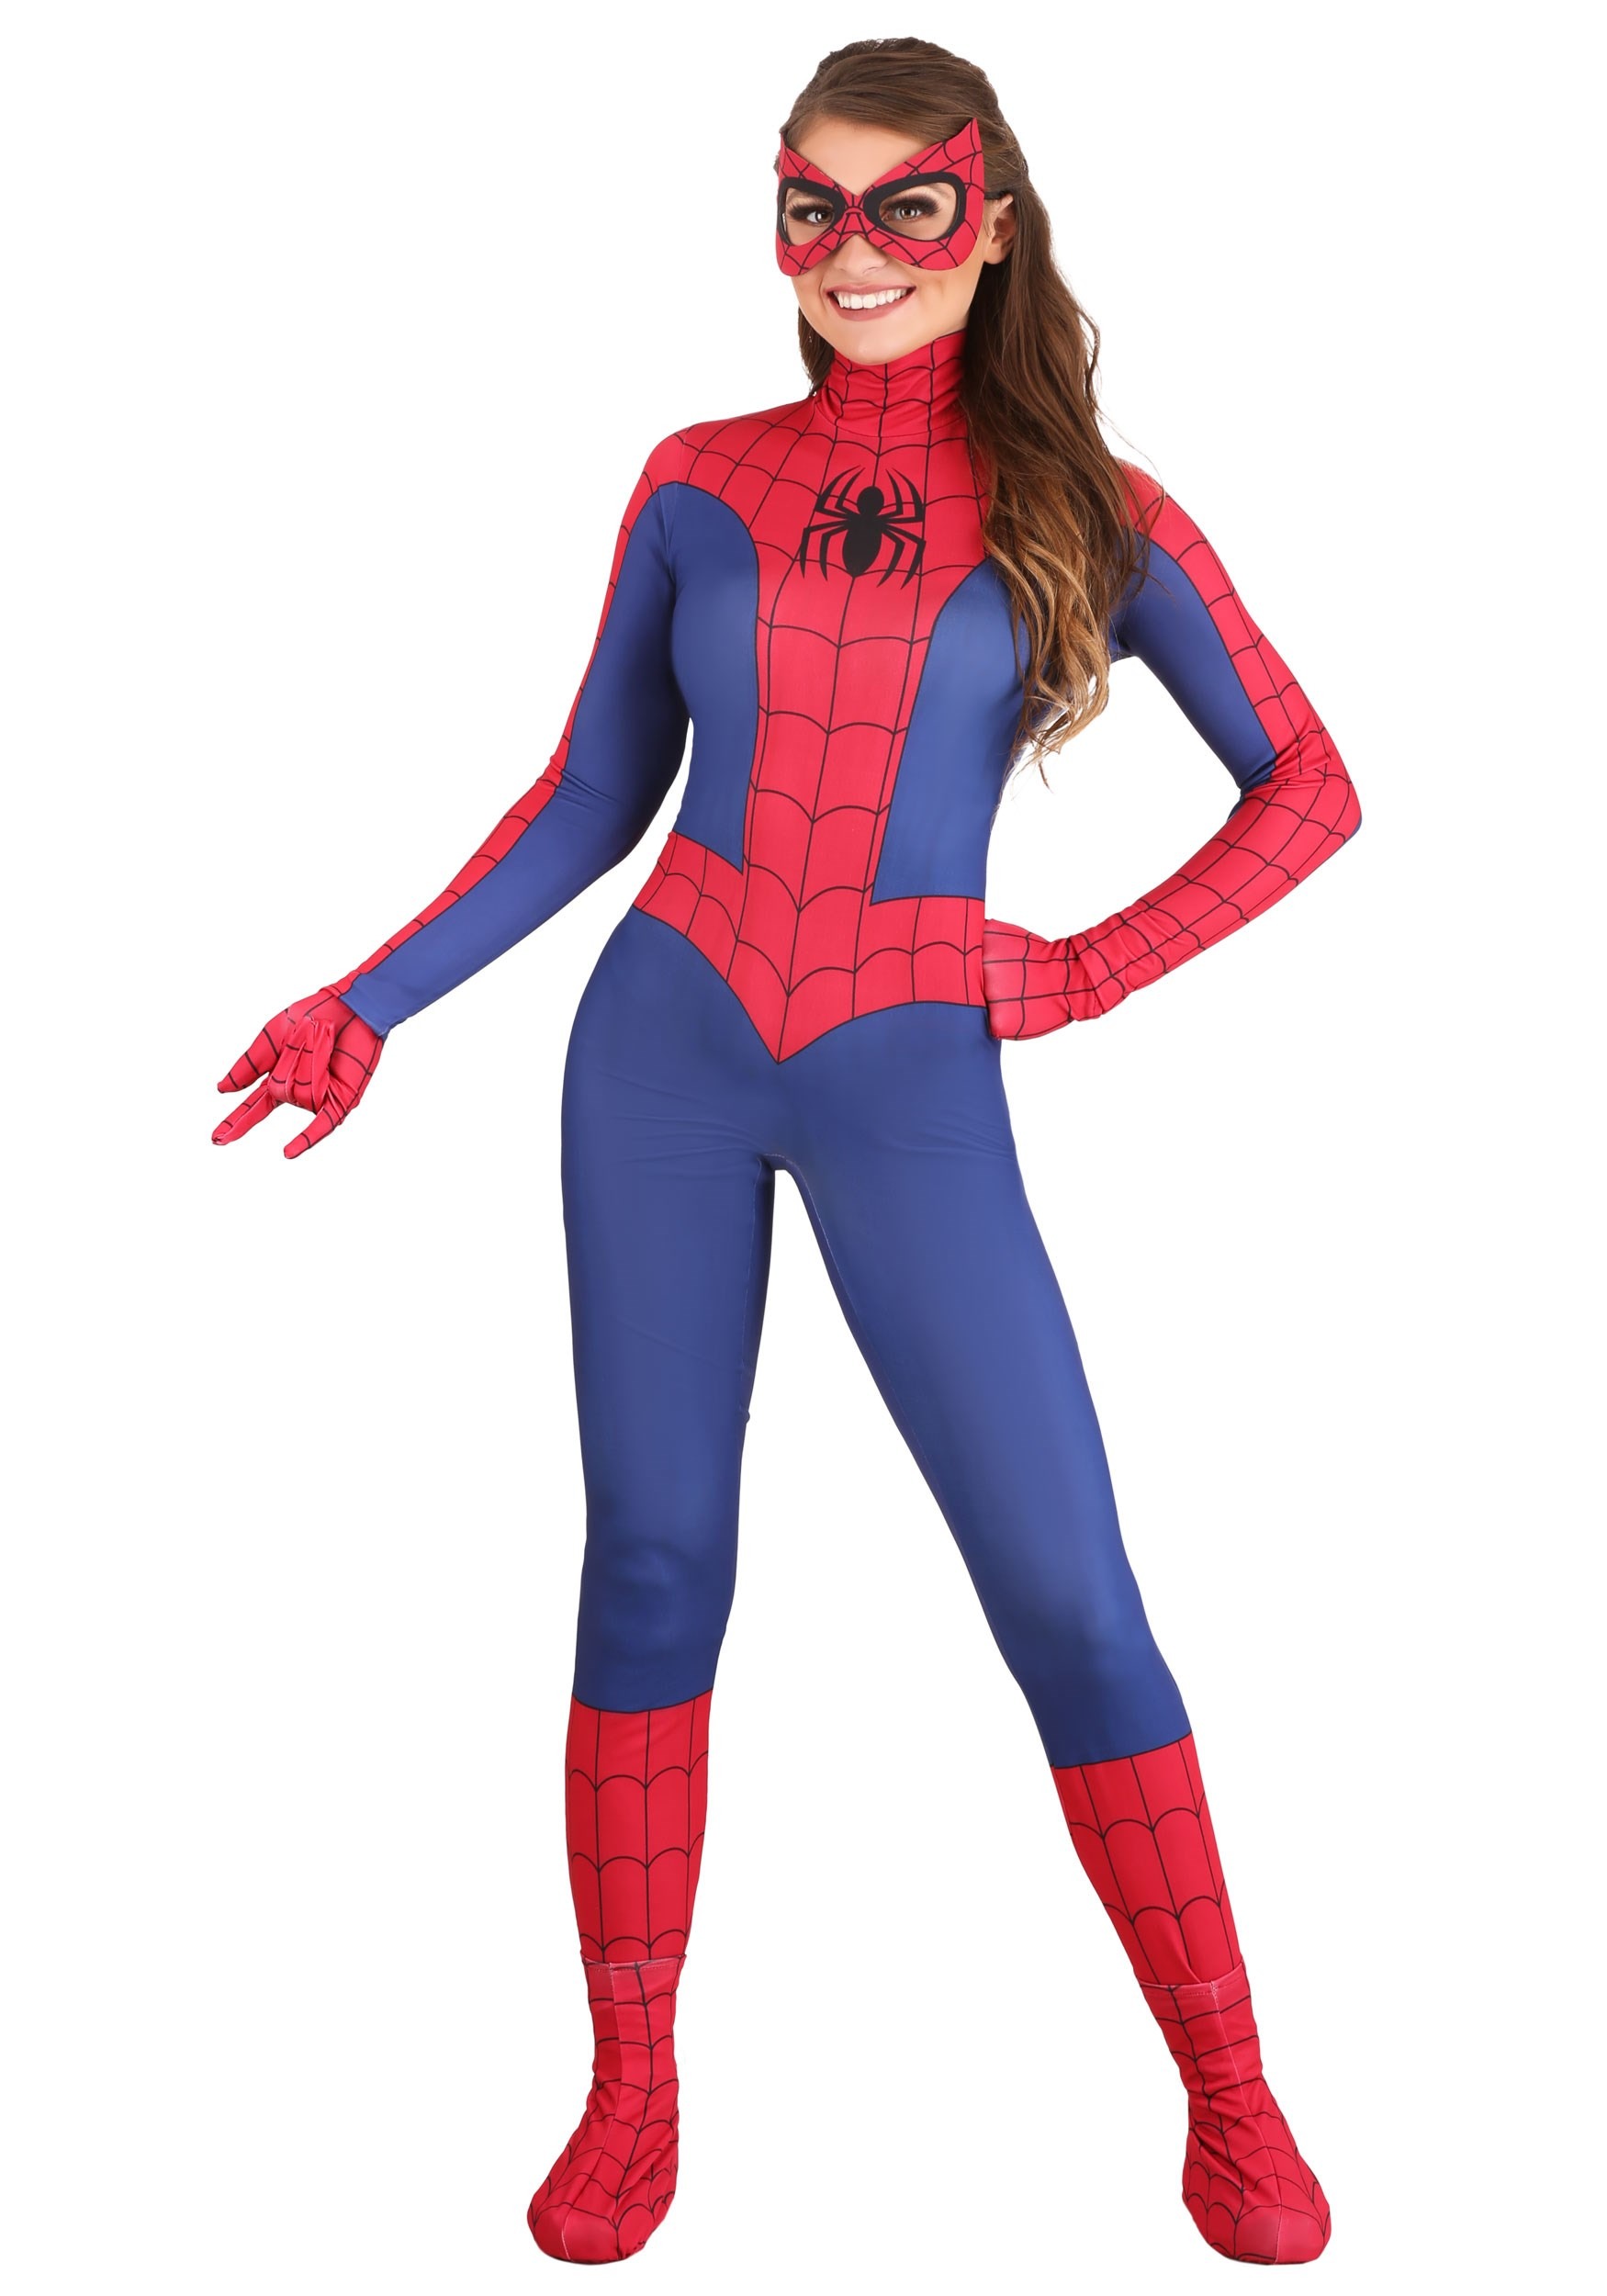 Spider-Man Costume For Women , Adult Superhero Costume